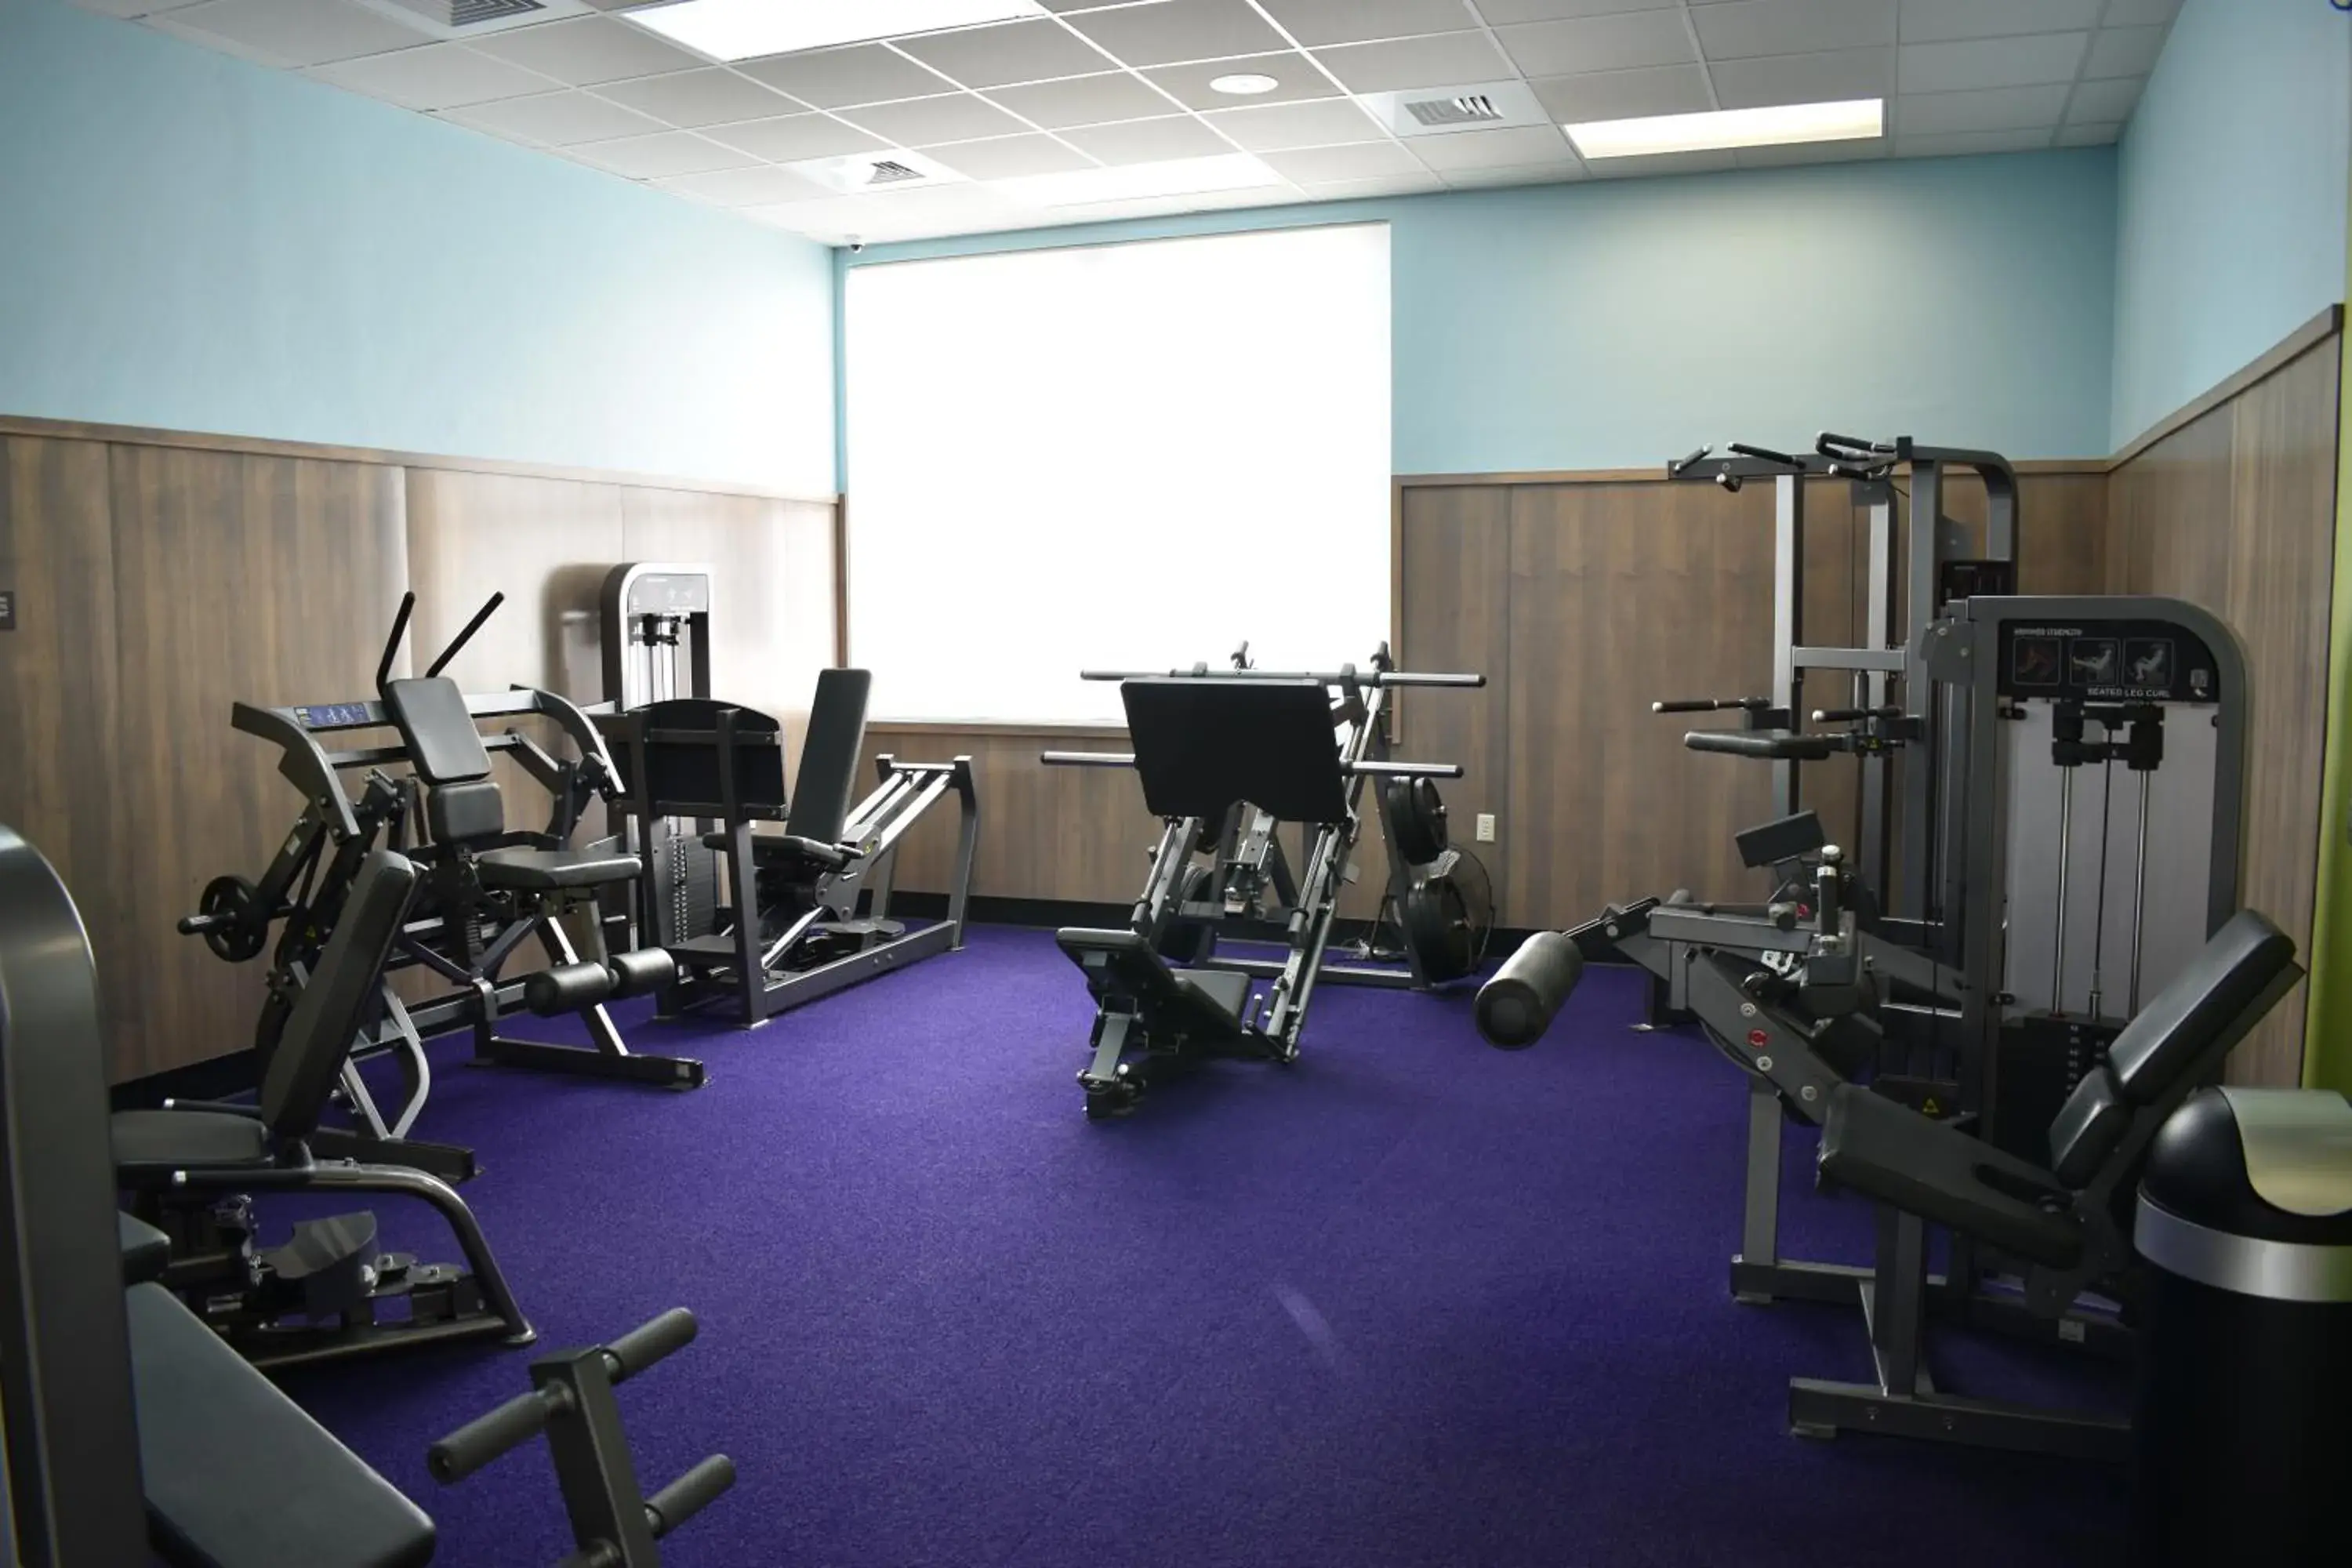 Fitness centre/facilities, Fitness Center/Facilities in Silver Horseshoe Inn